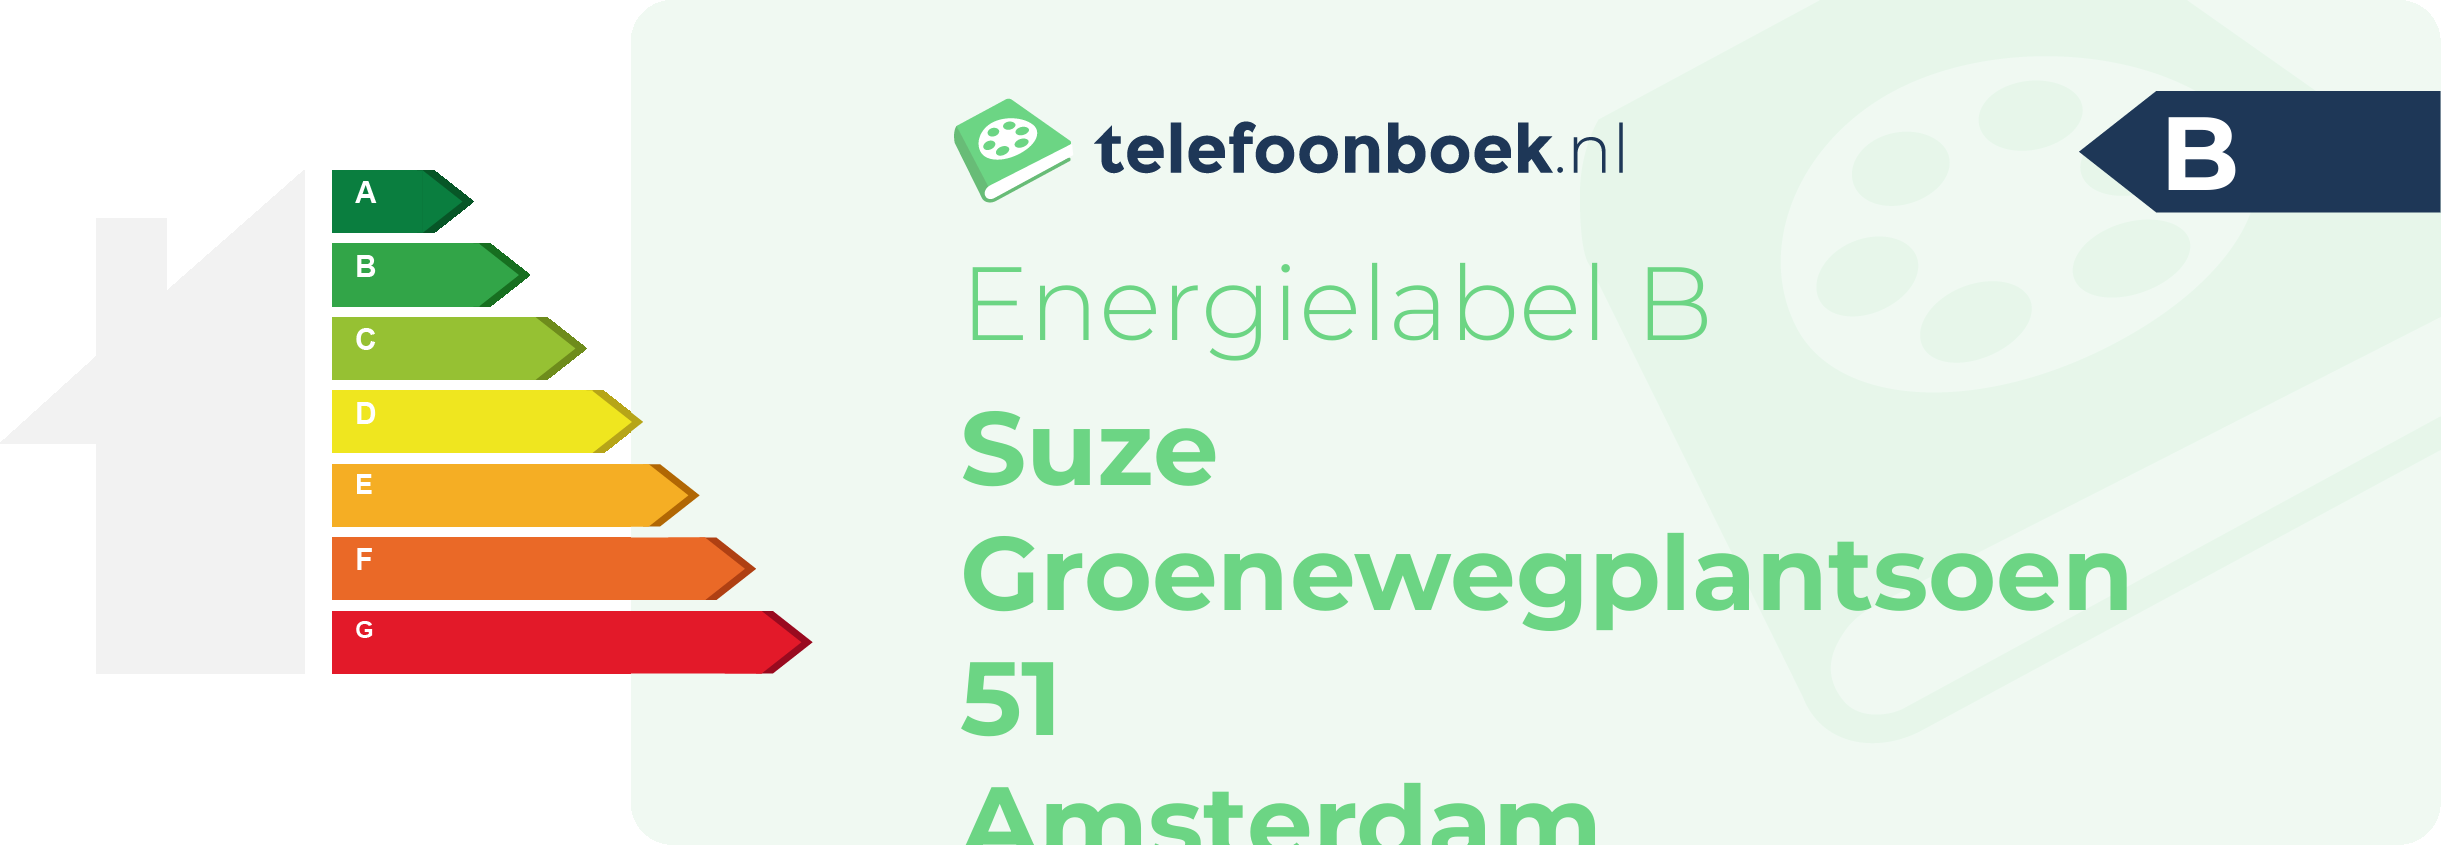 Energielabel Suze Groenewegplantsoen 51 Amsterdam